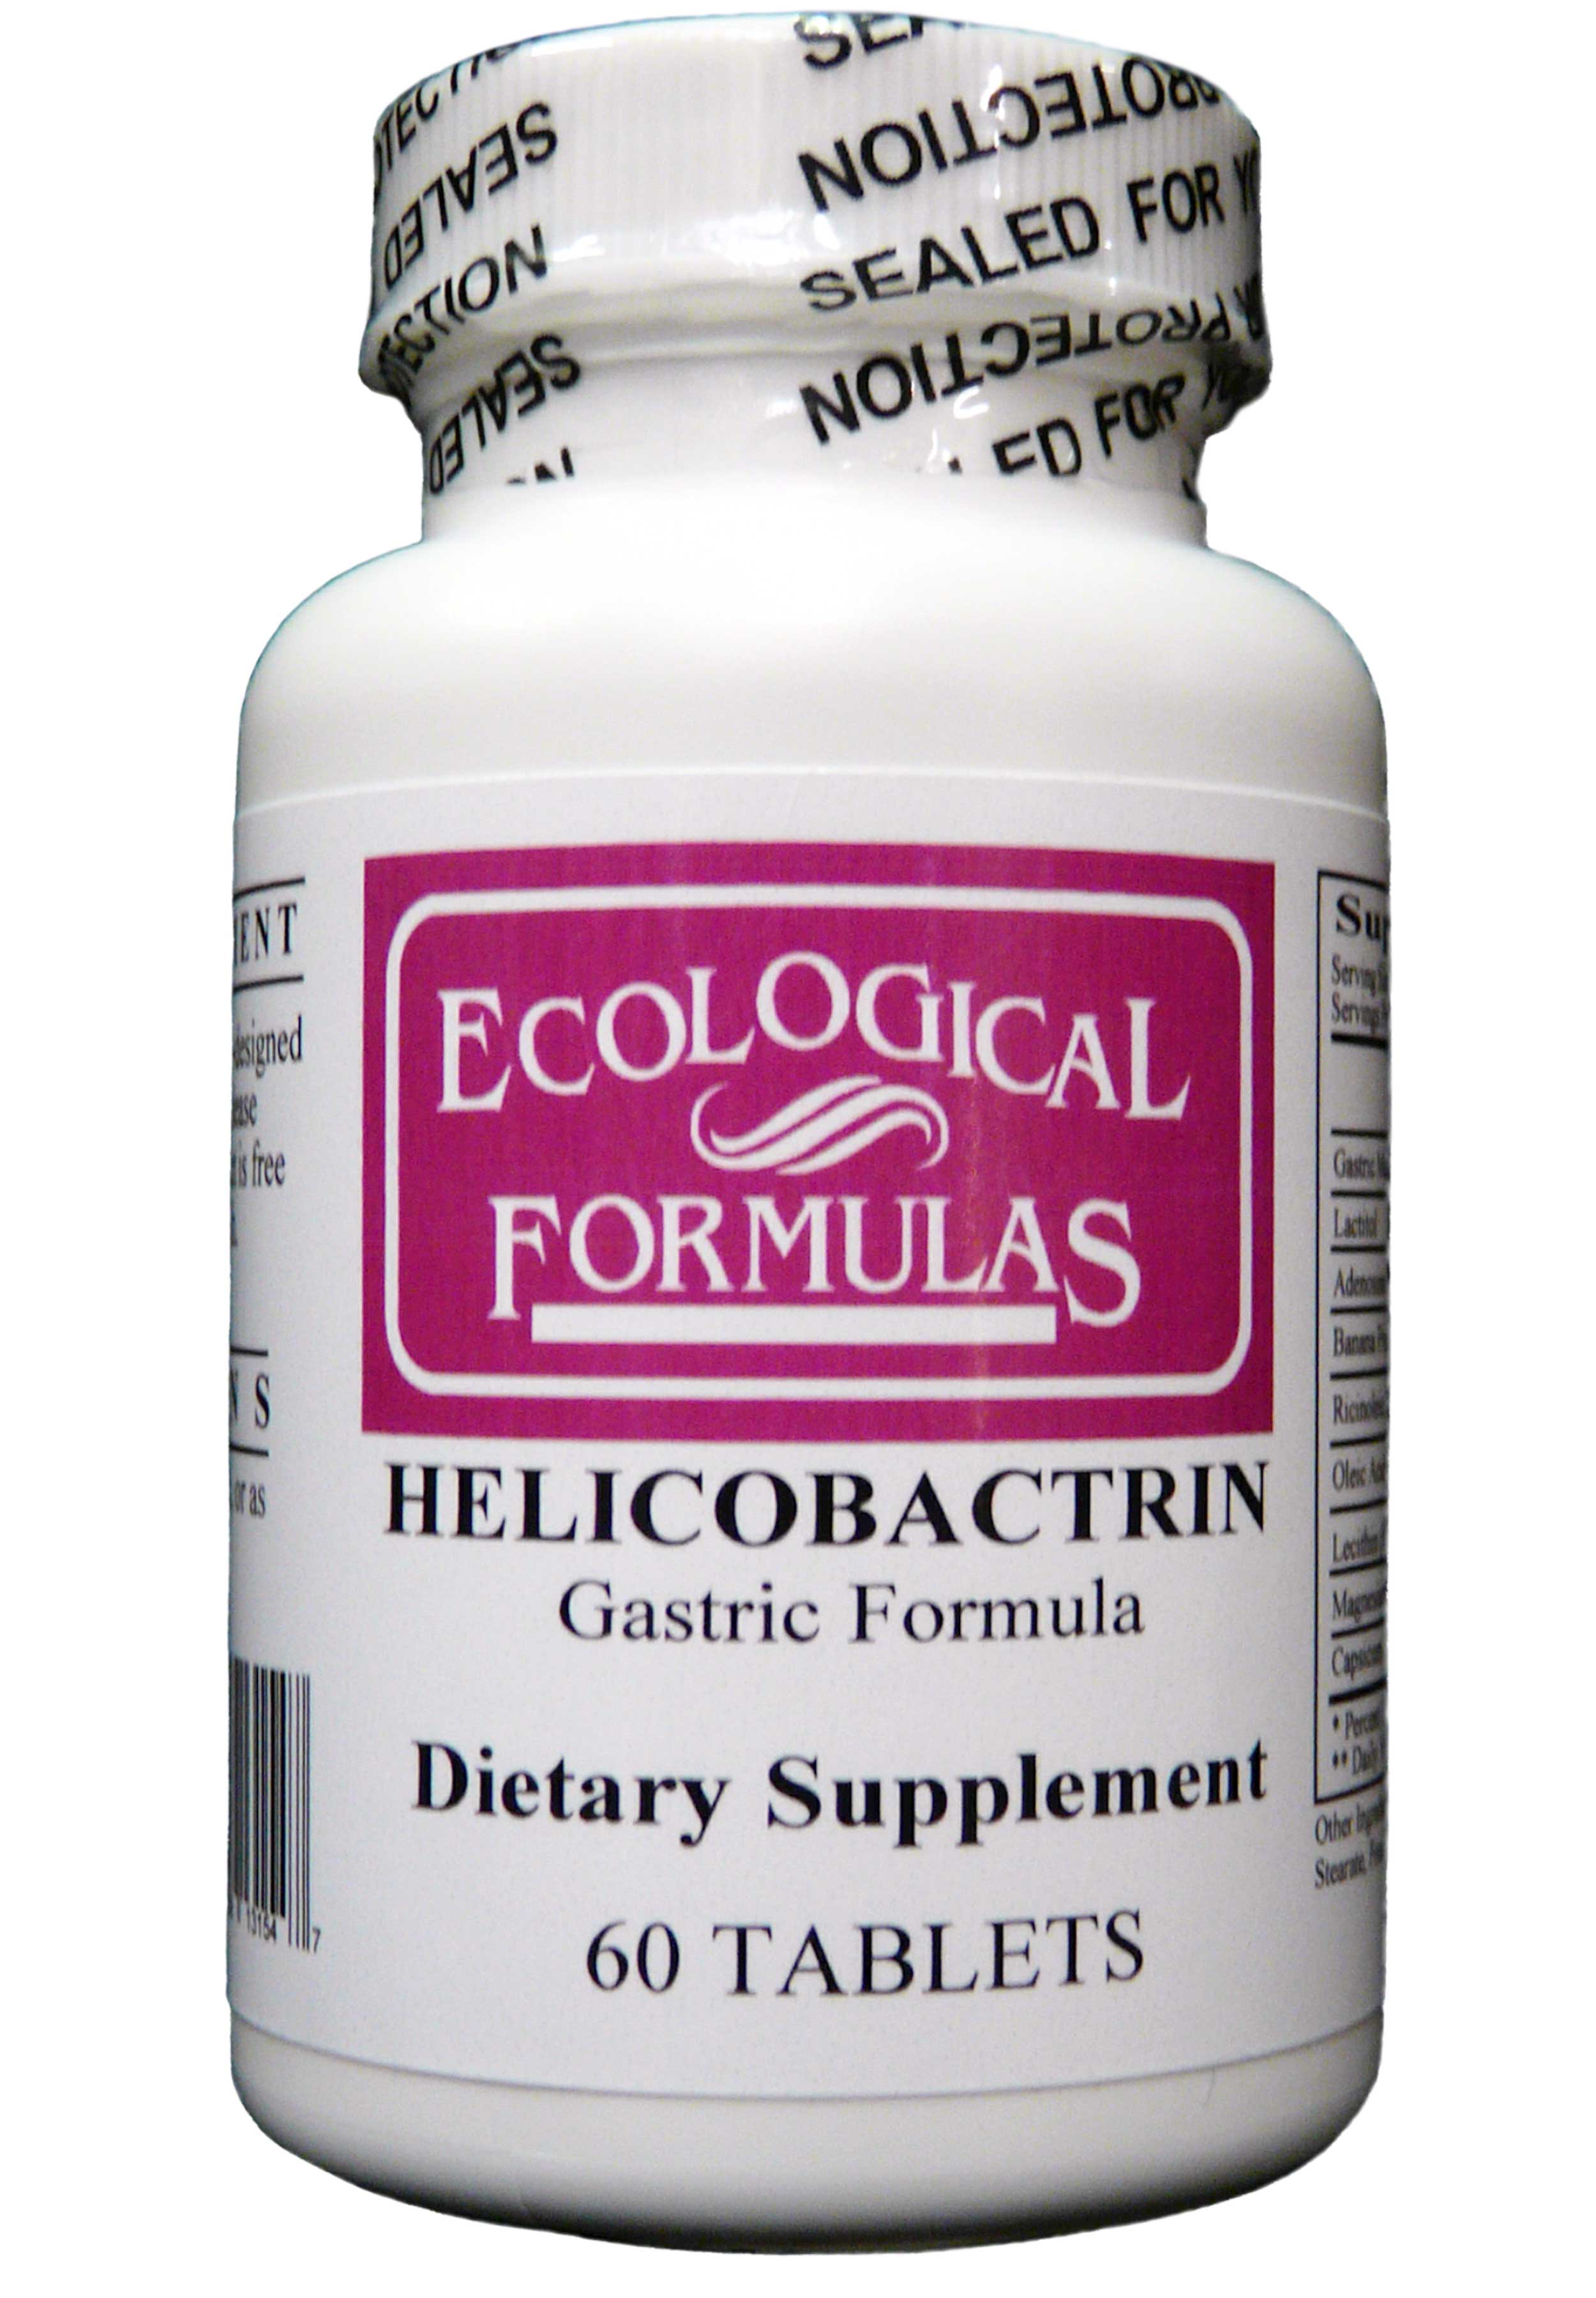 Ecological Formulas/Cardiovascular Research Helicobactrim (Gastric Formula)